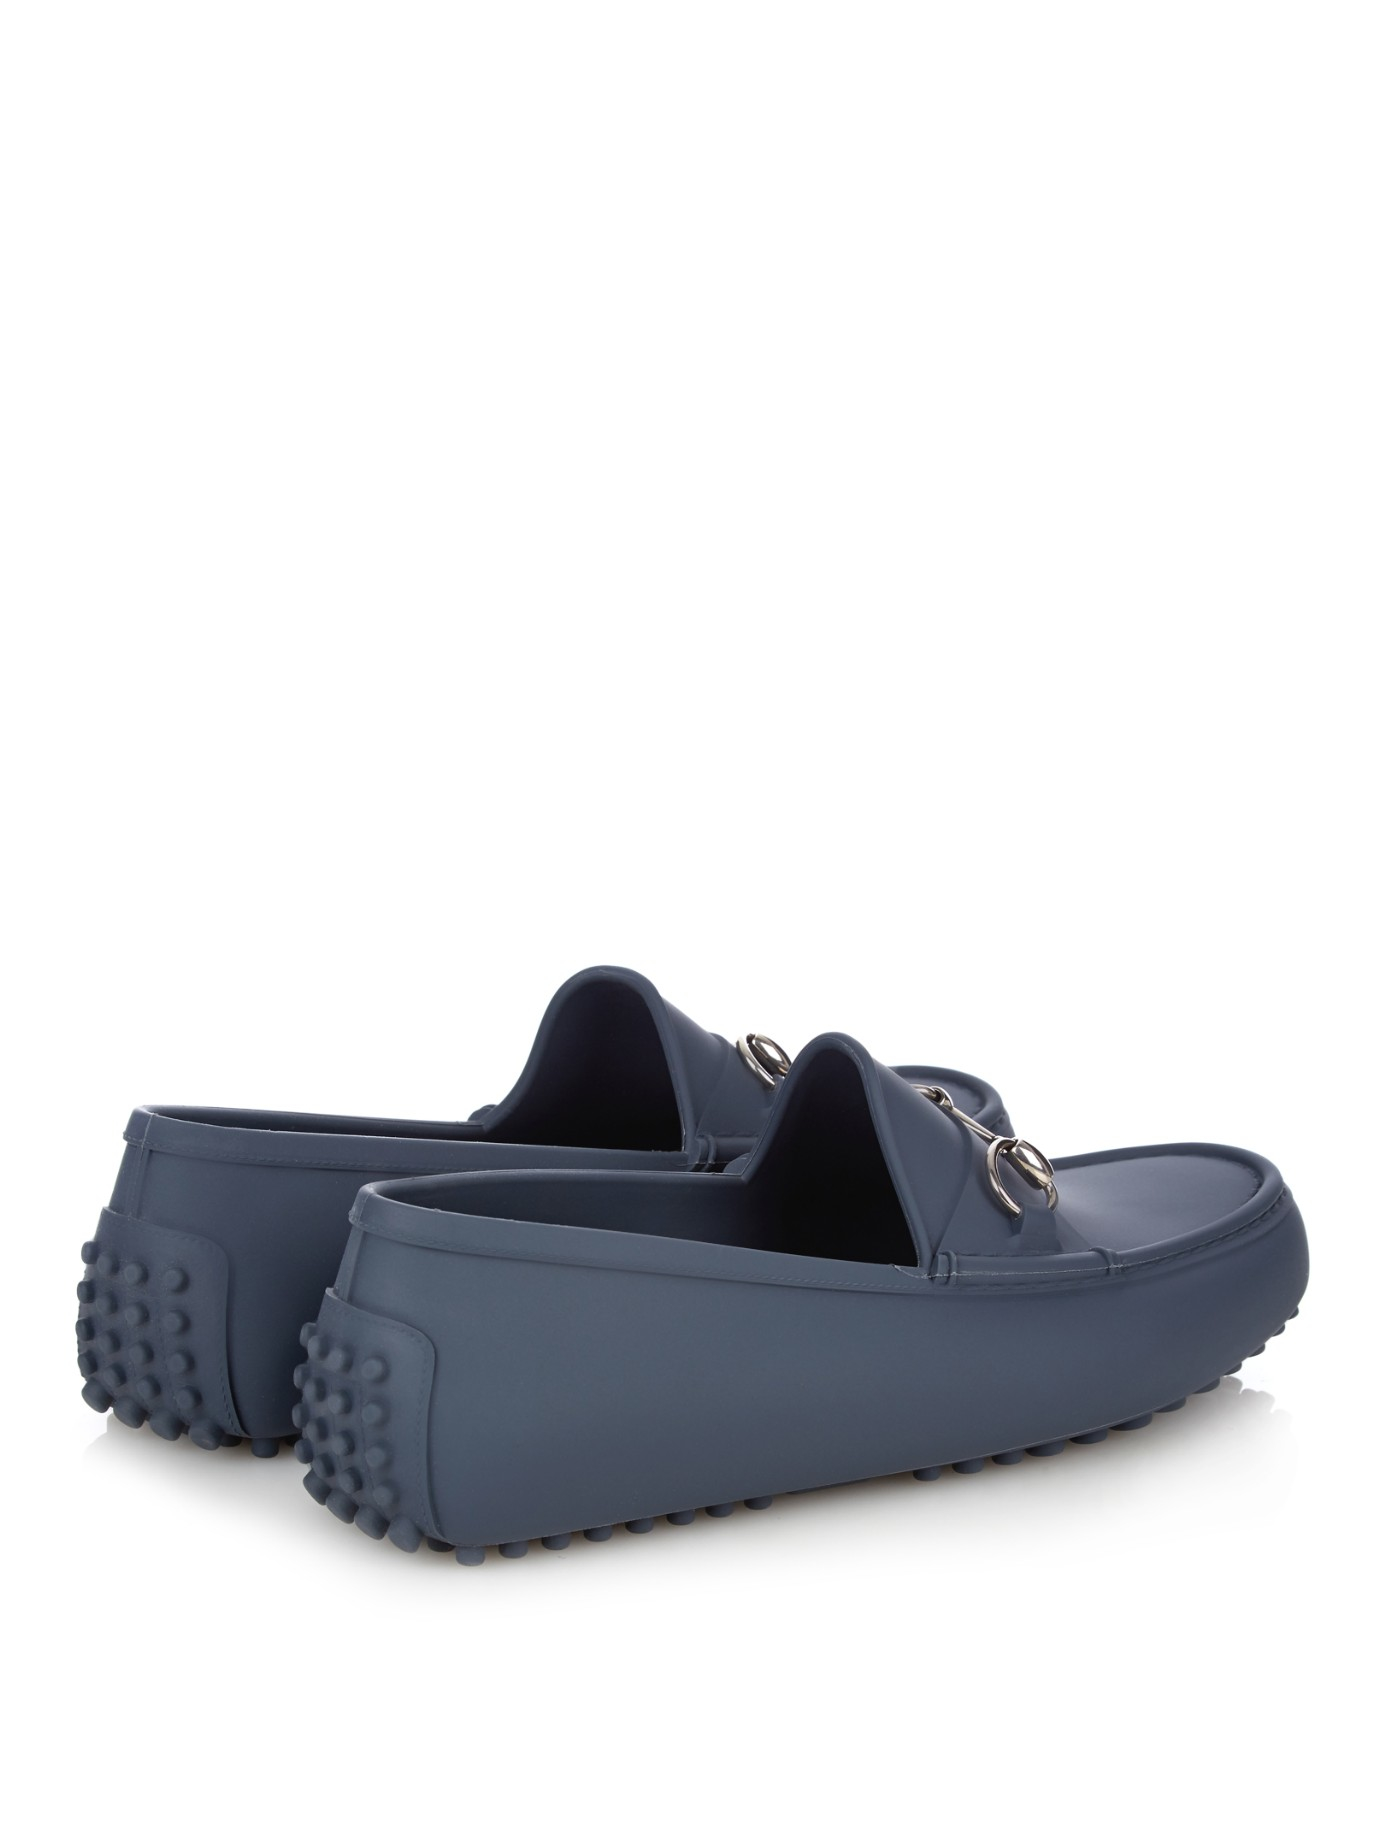 gucci rubber shoes for men